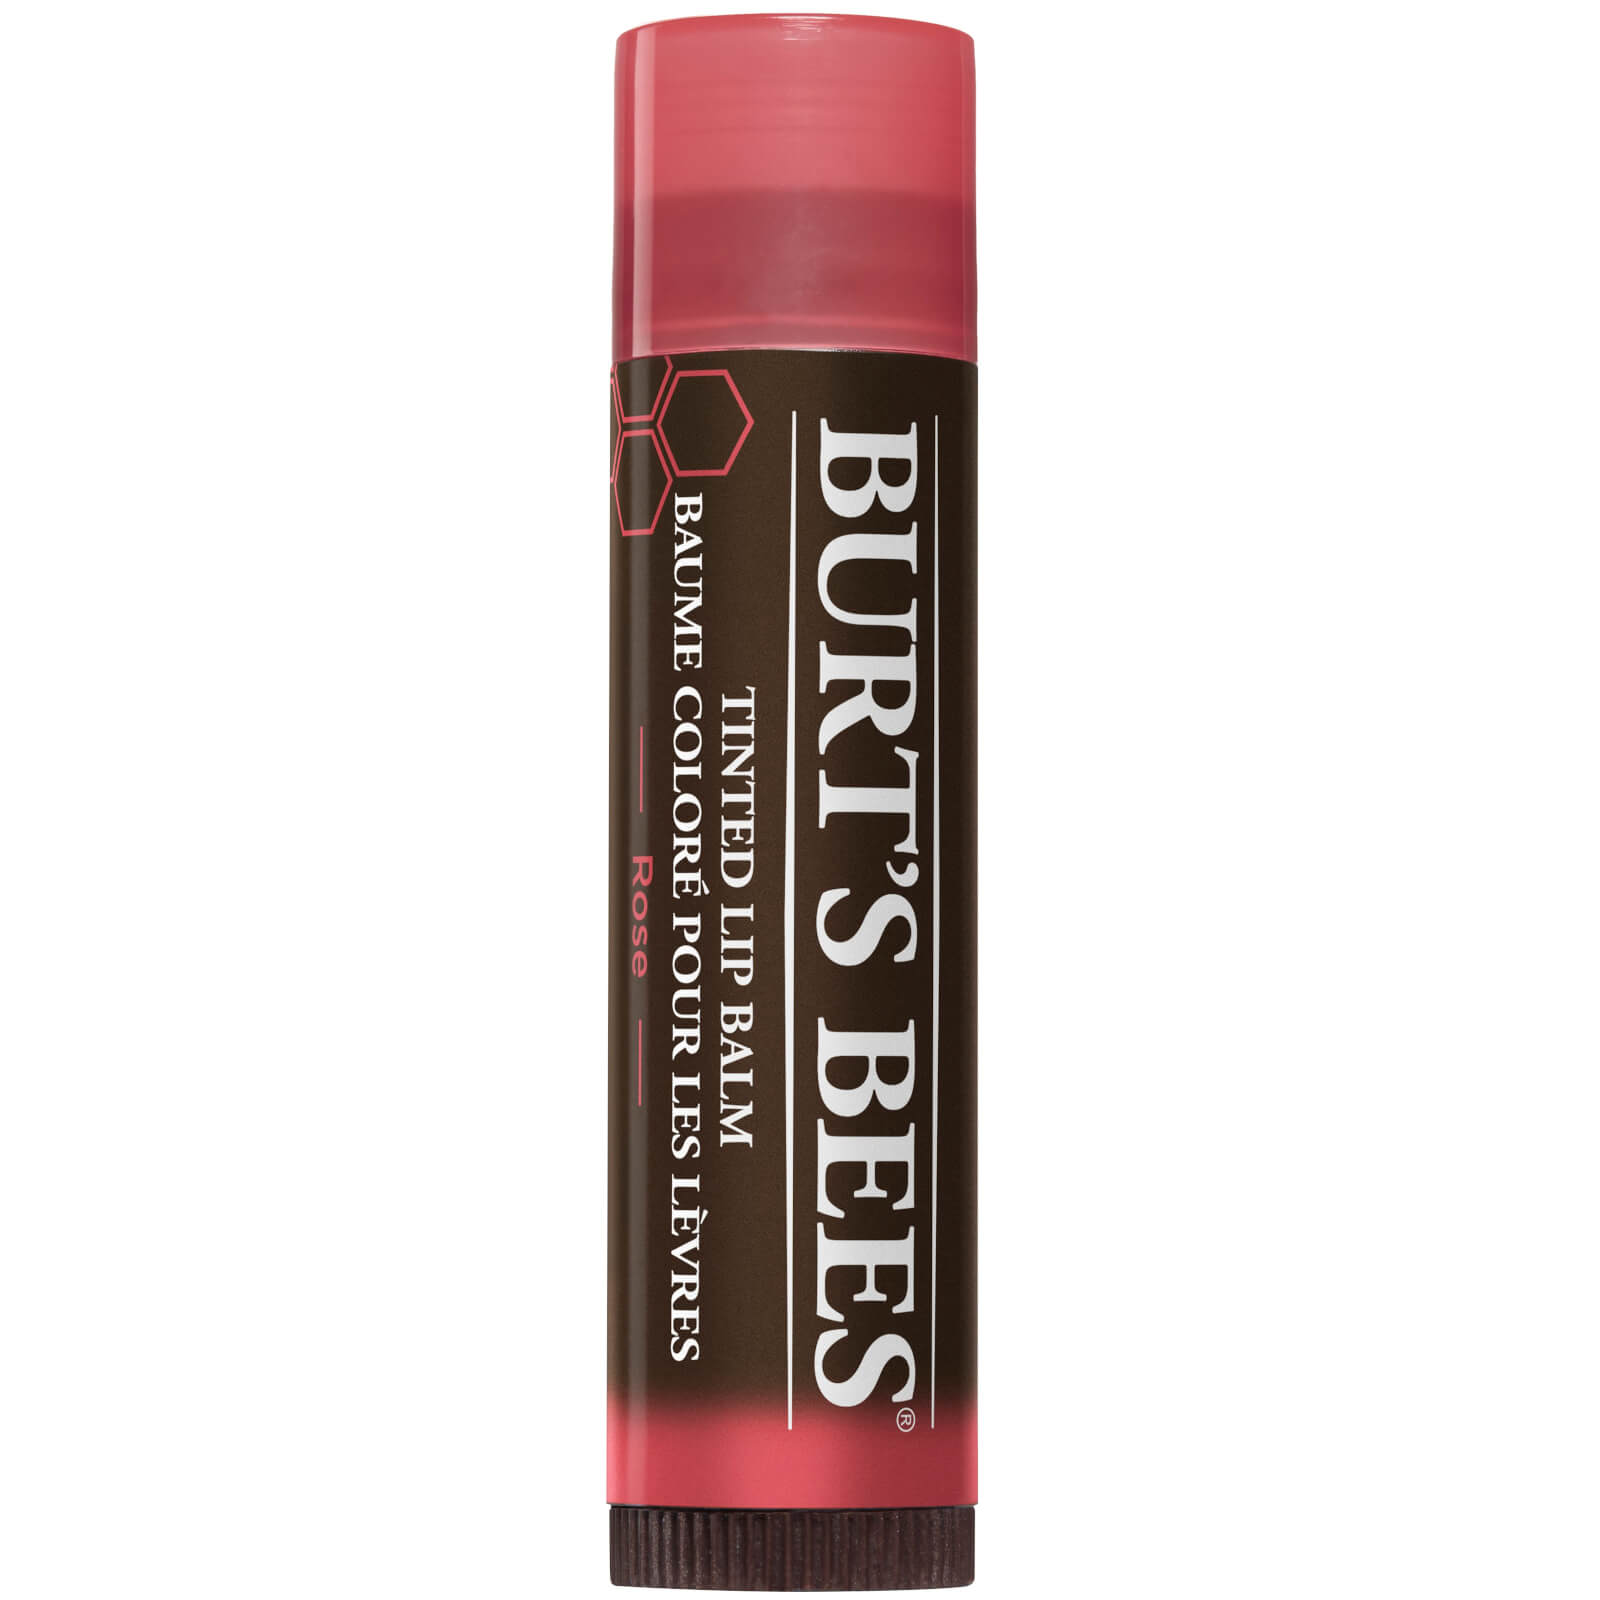 Burt's Bees Tinted Lip Balm (flere nyanser) - Rose